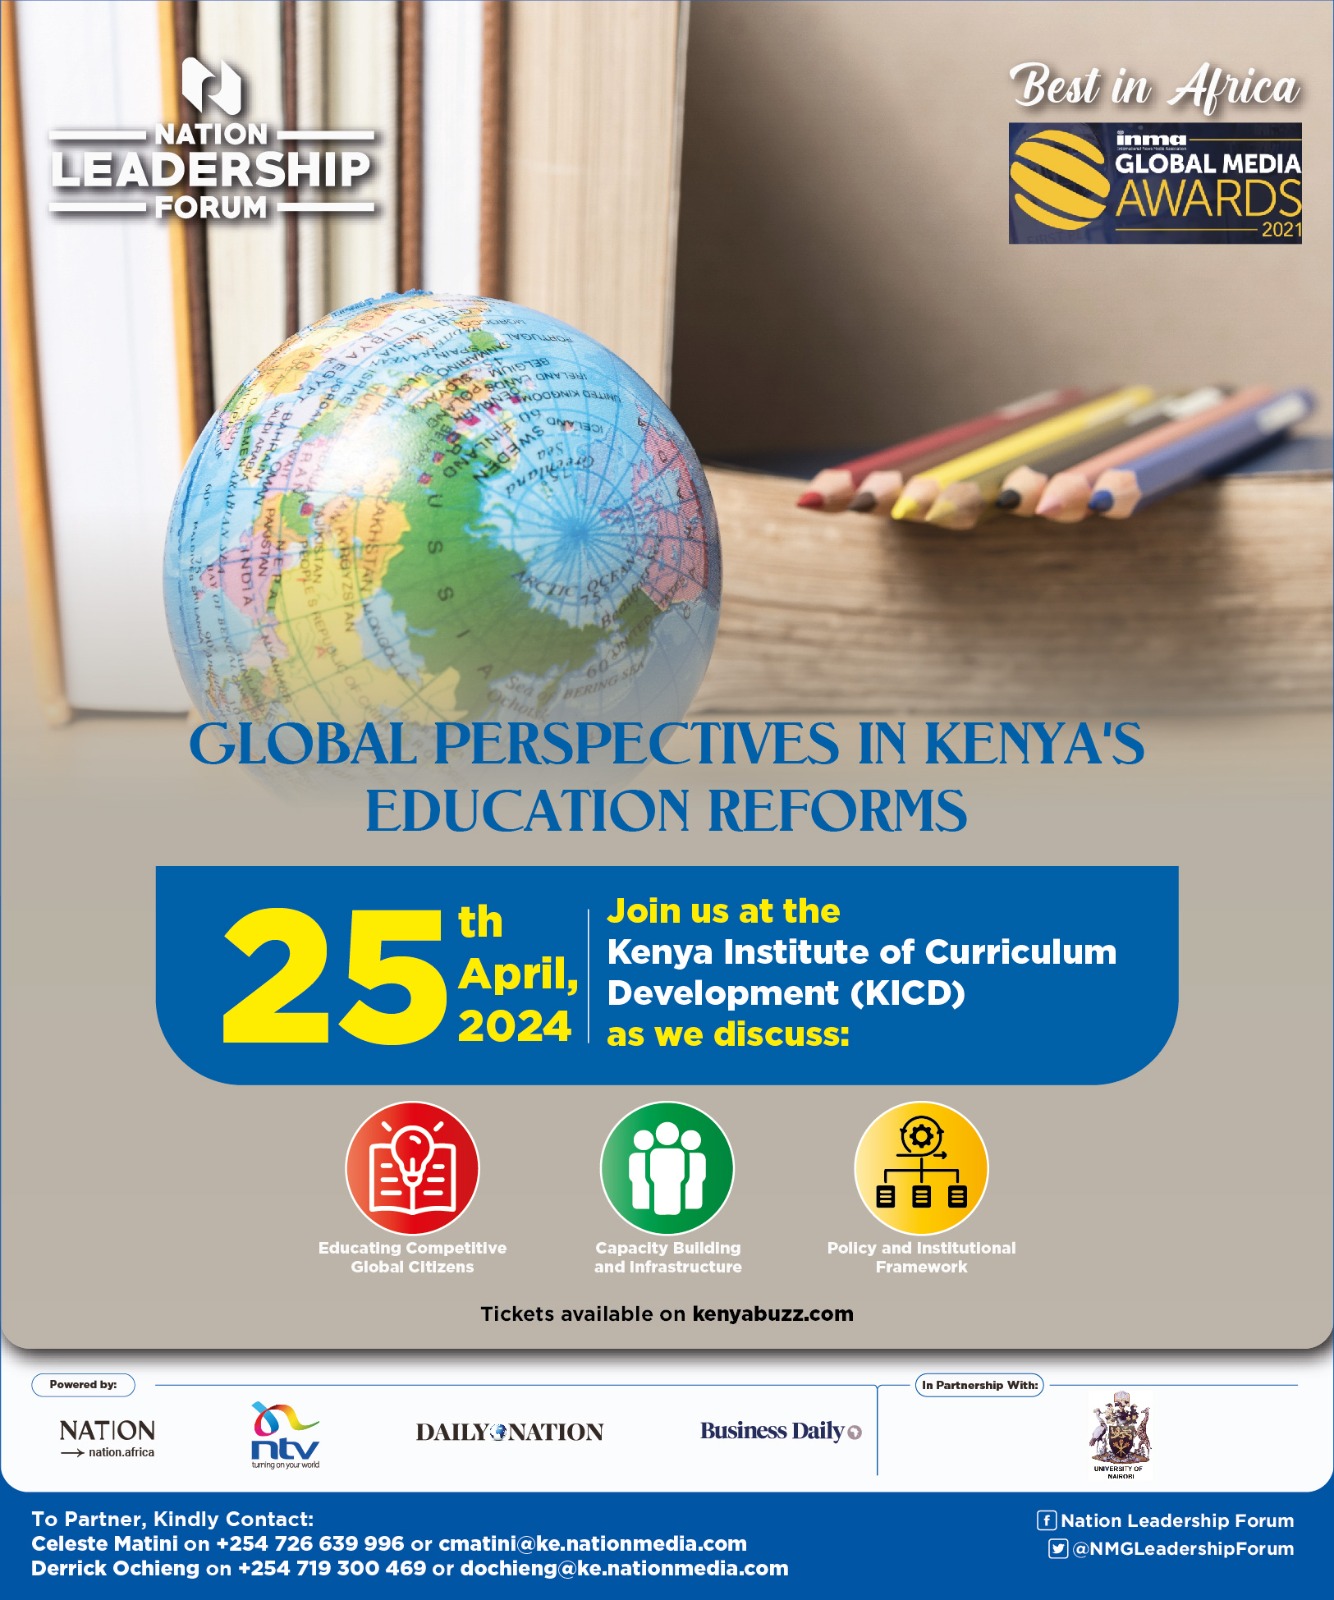 Nation Leadership Forum - Global Perspective in Kenya's Education Reforms